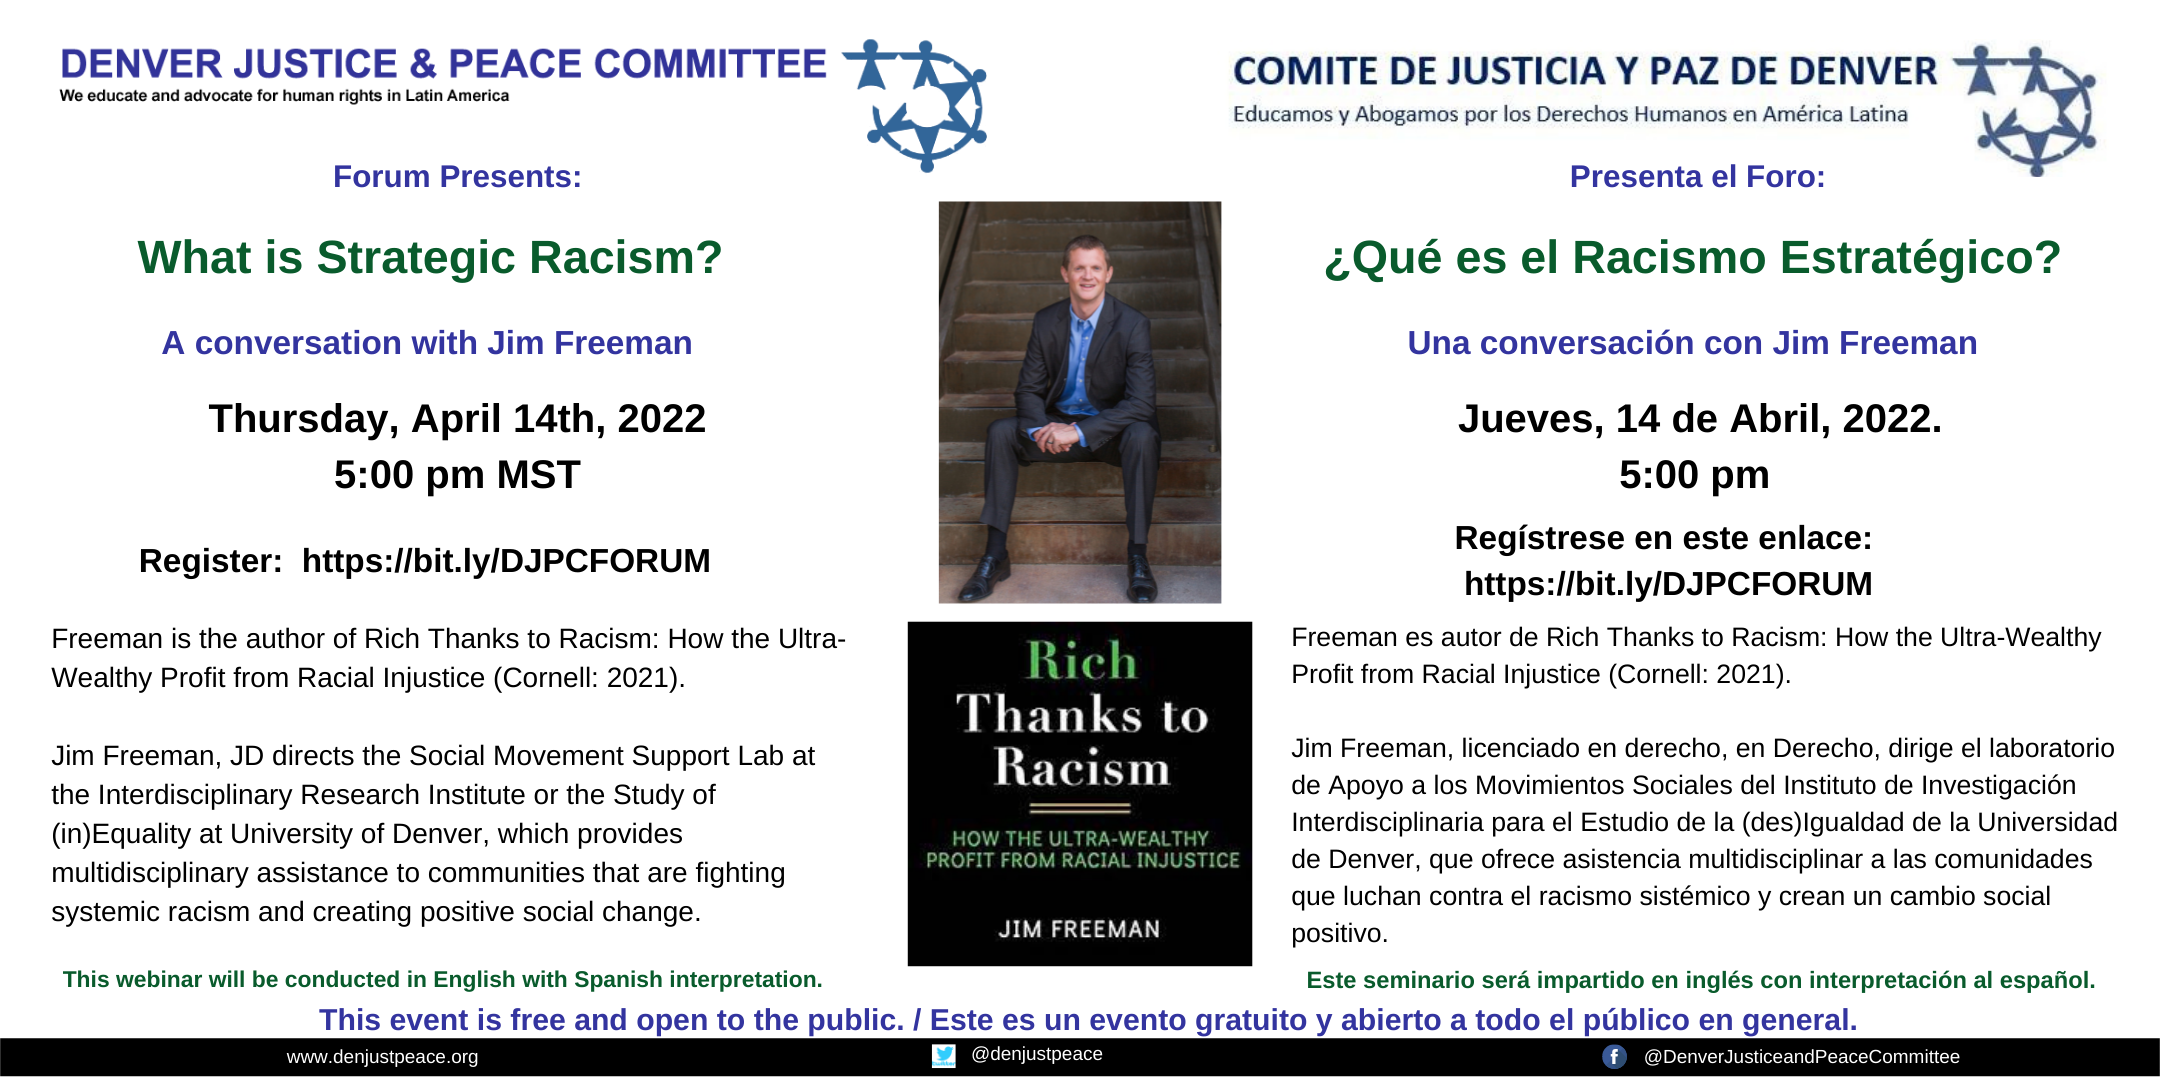 DJPC Forum: What is Strategic Racism? Thursday, April 14th at 5:00 pm.